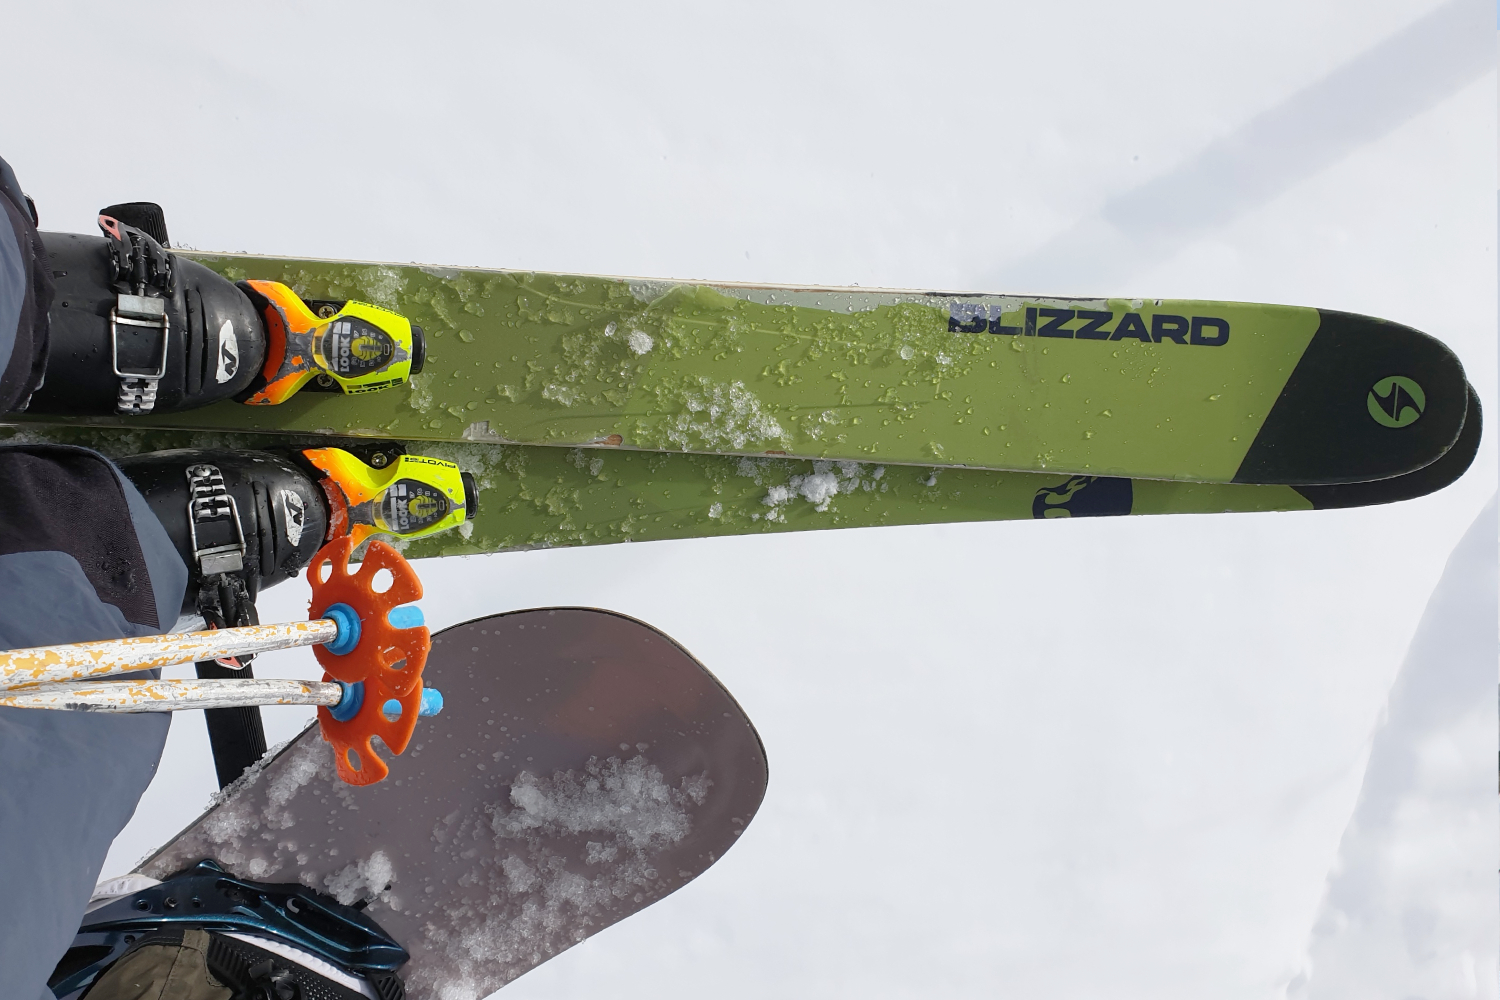 Snowboard versus Ski